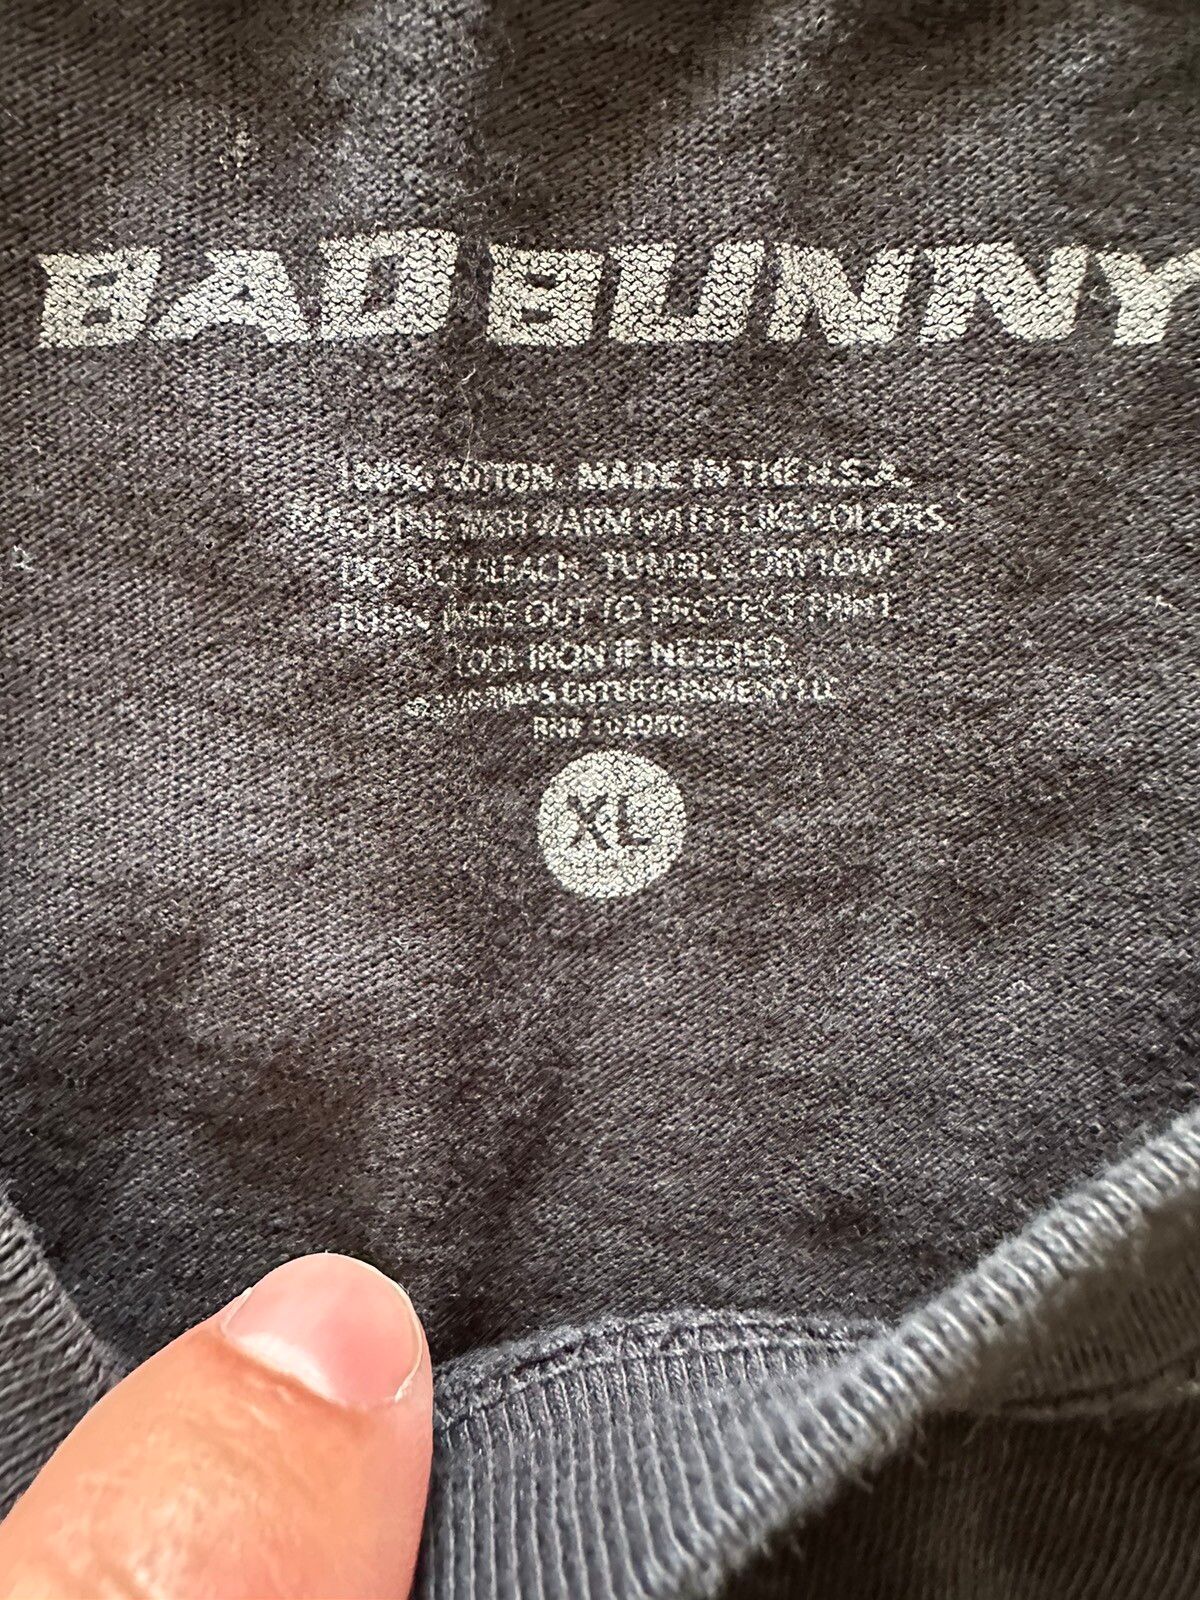 Rock Tees Bad Bunny YHLQMDLG Blocks Exclusive Tour Merchandise Shirt Size US XL / EU 56 / 4 - 6 Preview